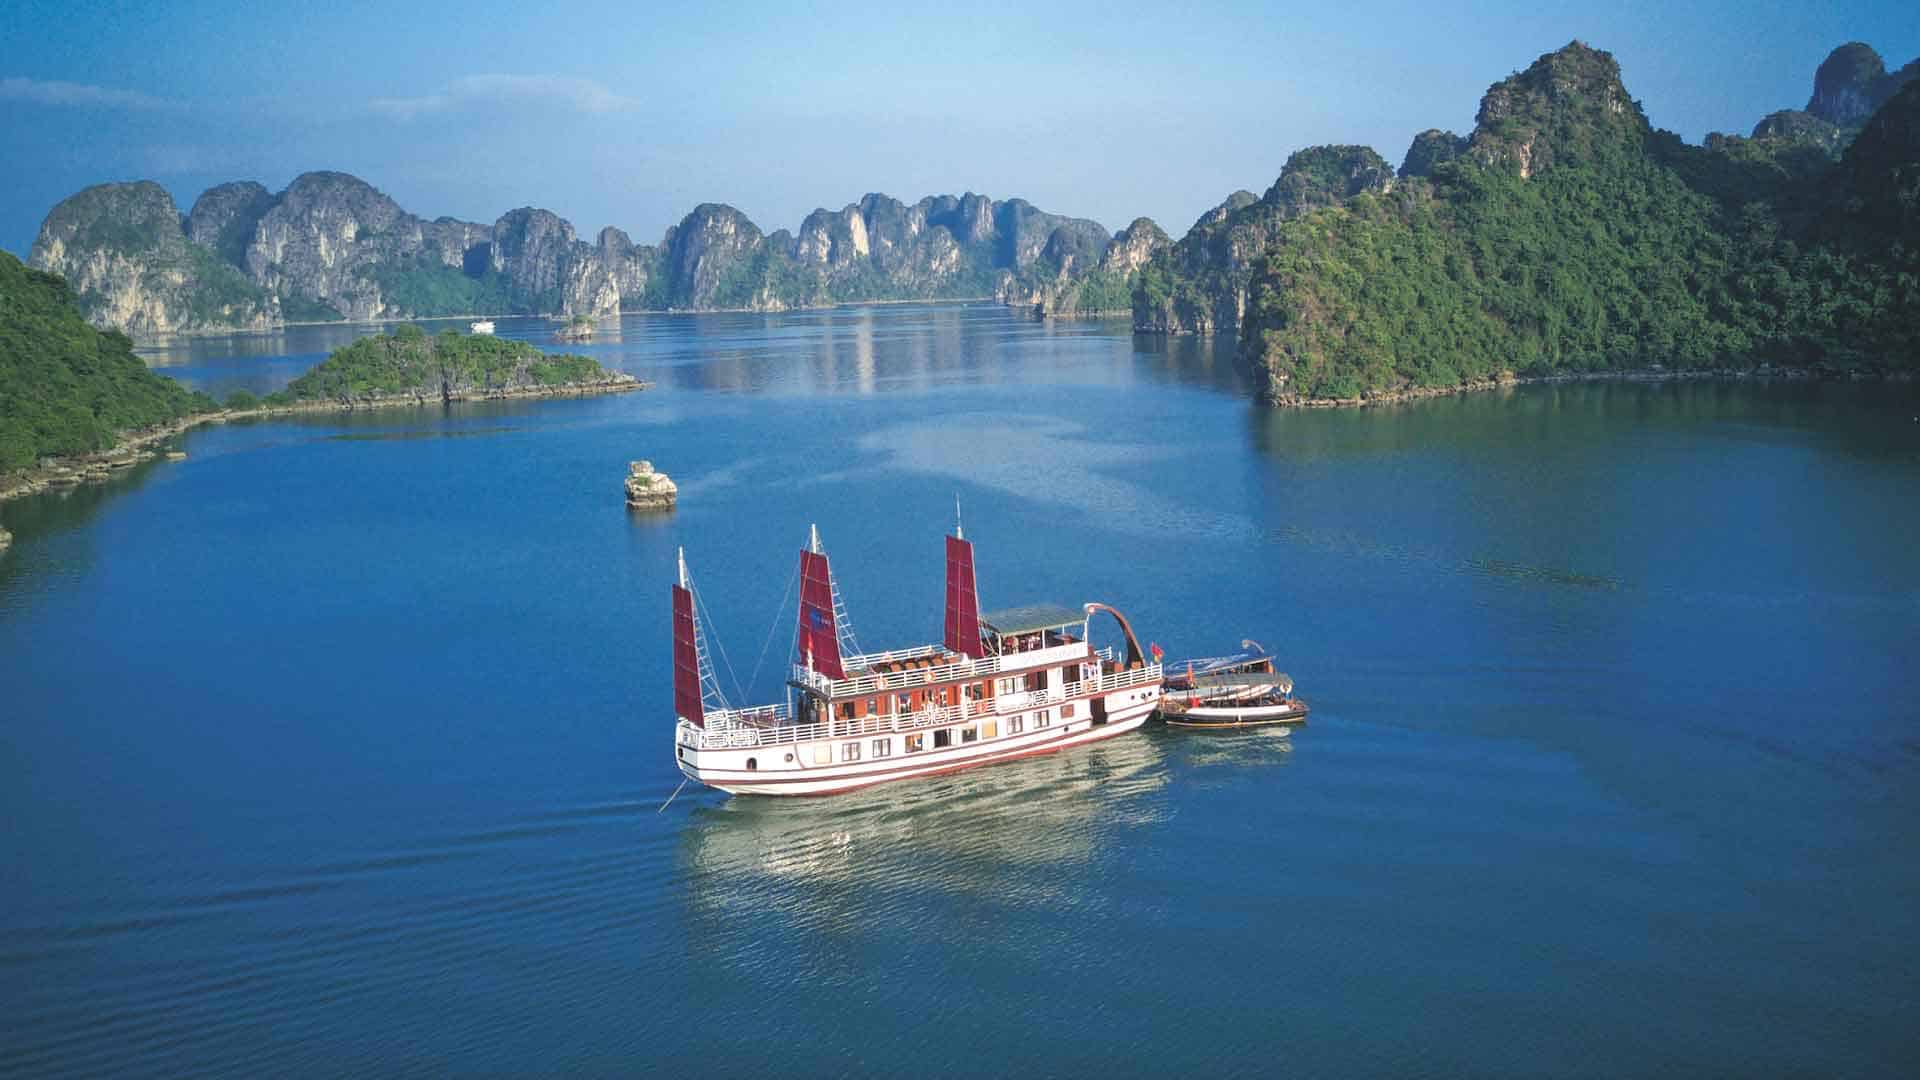 Gray Line Cruise: an International Brand Ship in Halong Bay